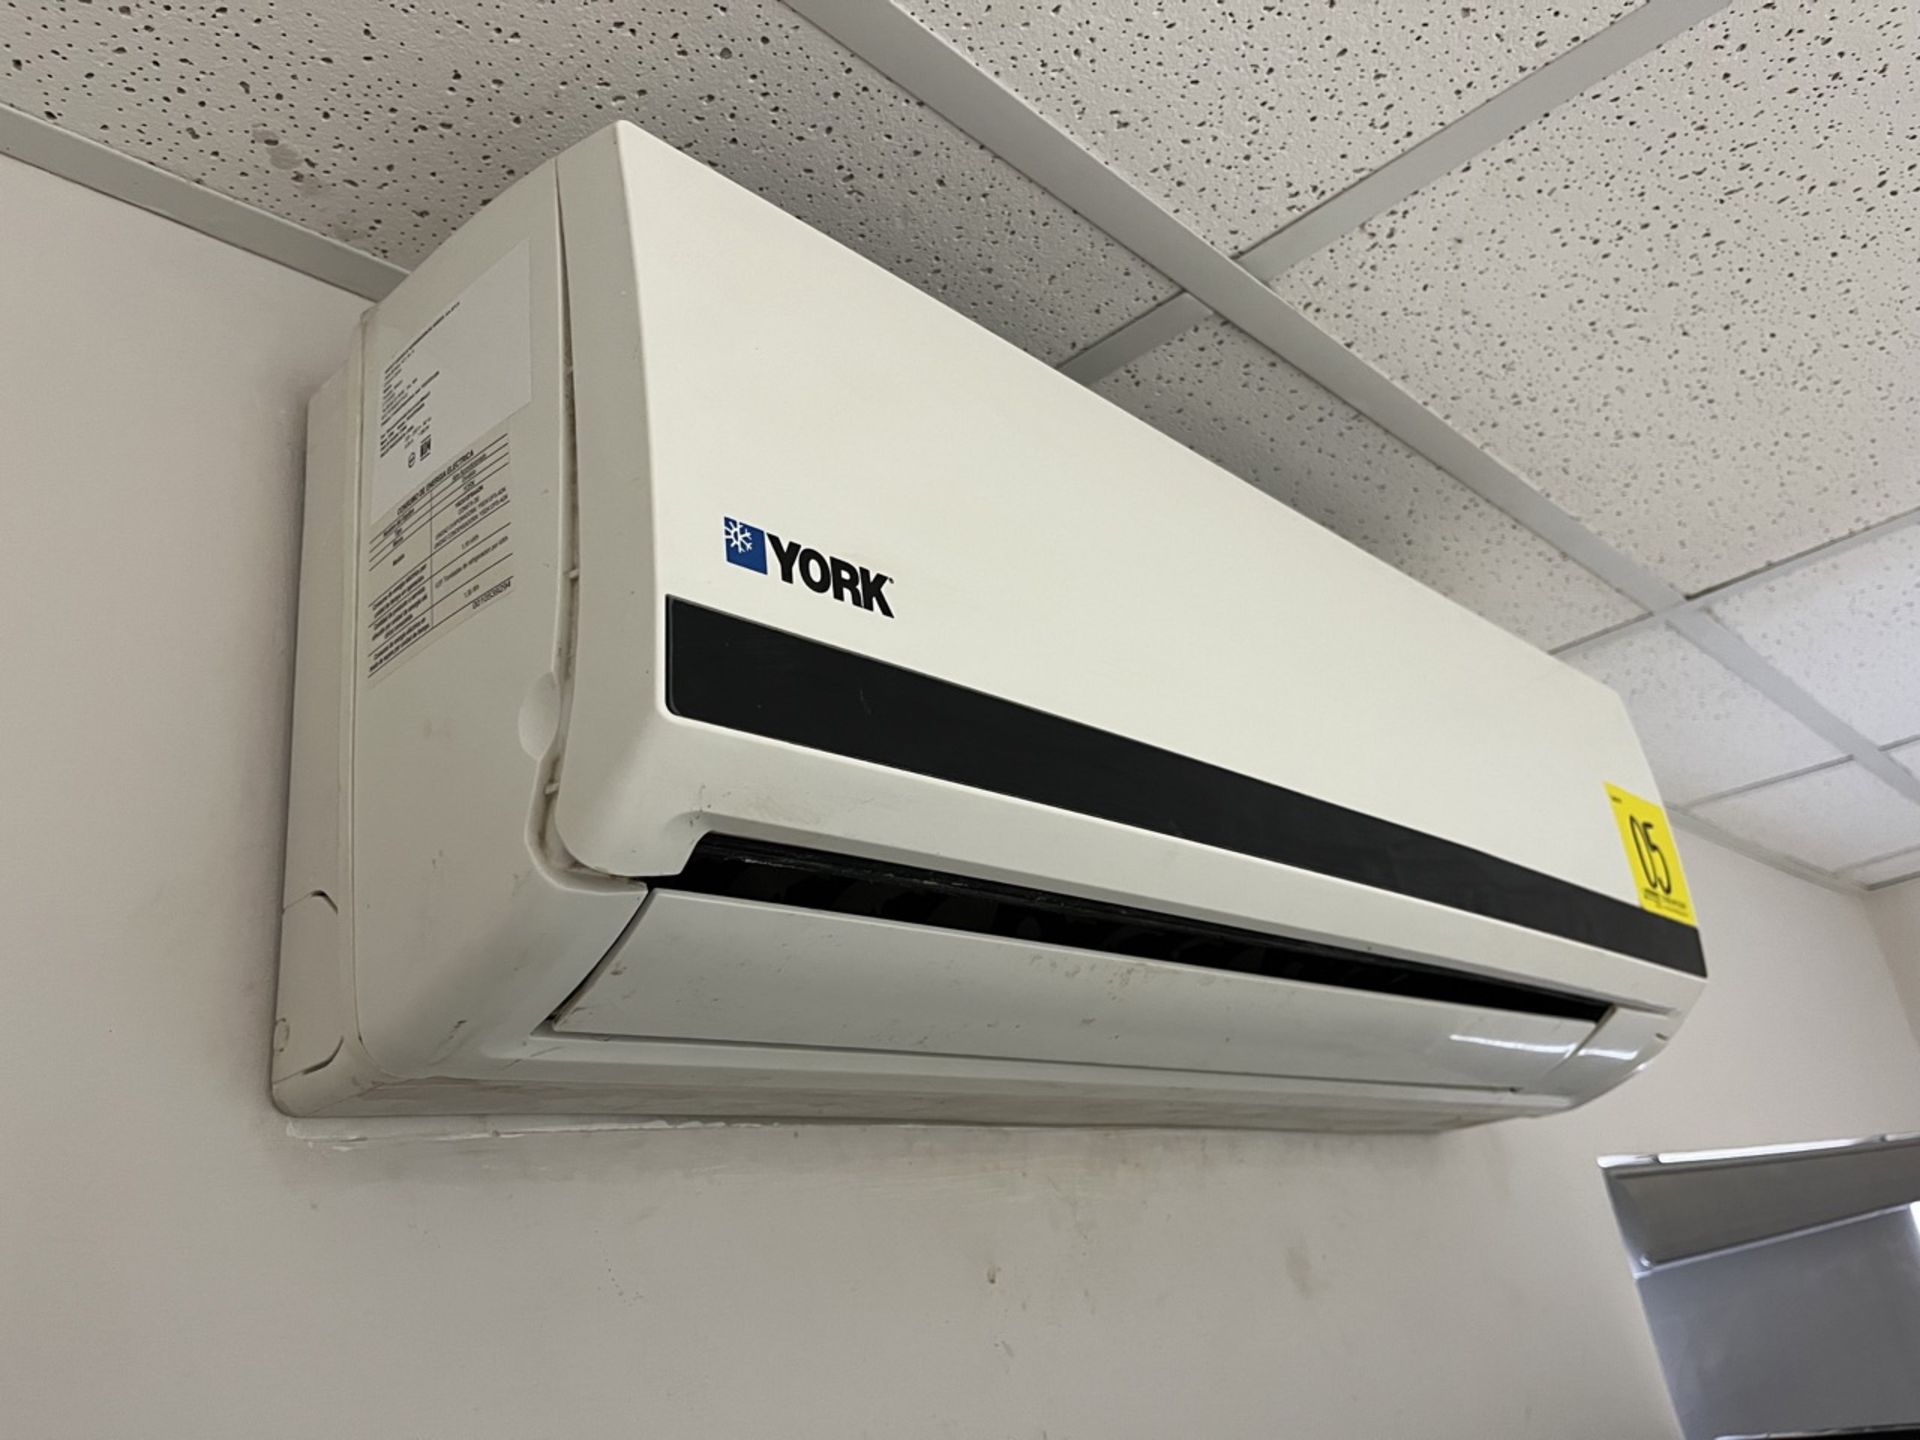 York minisplit air conditioner with control, Model YSEA12FS-ADK, Series 100001010140290128, 220 Vol - Image 5 of 11